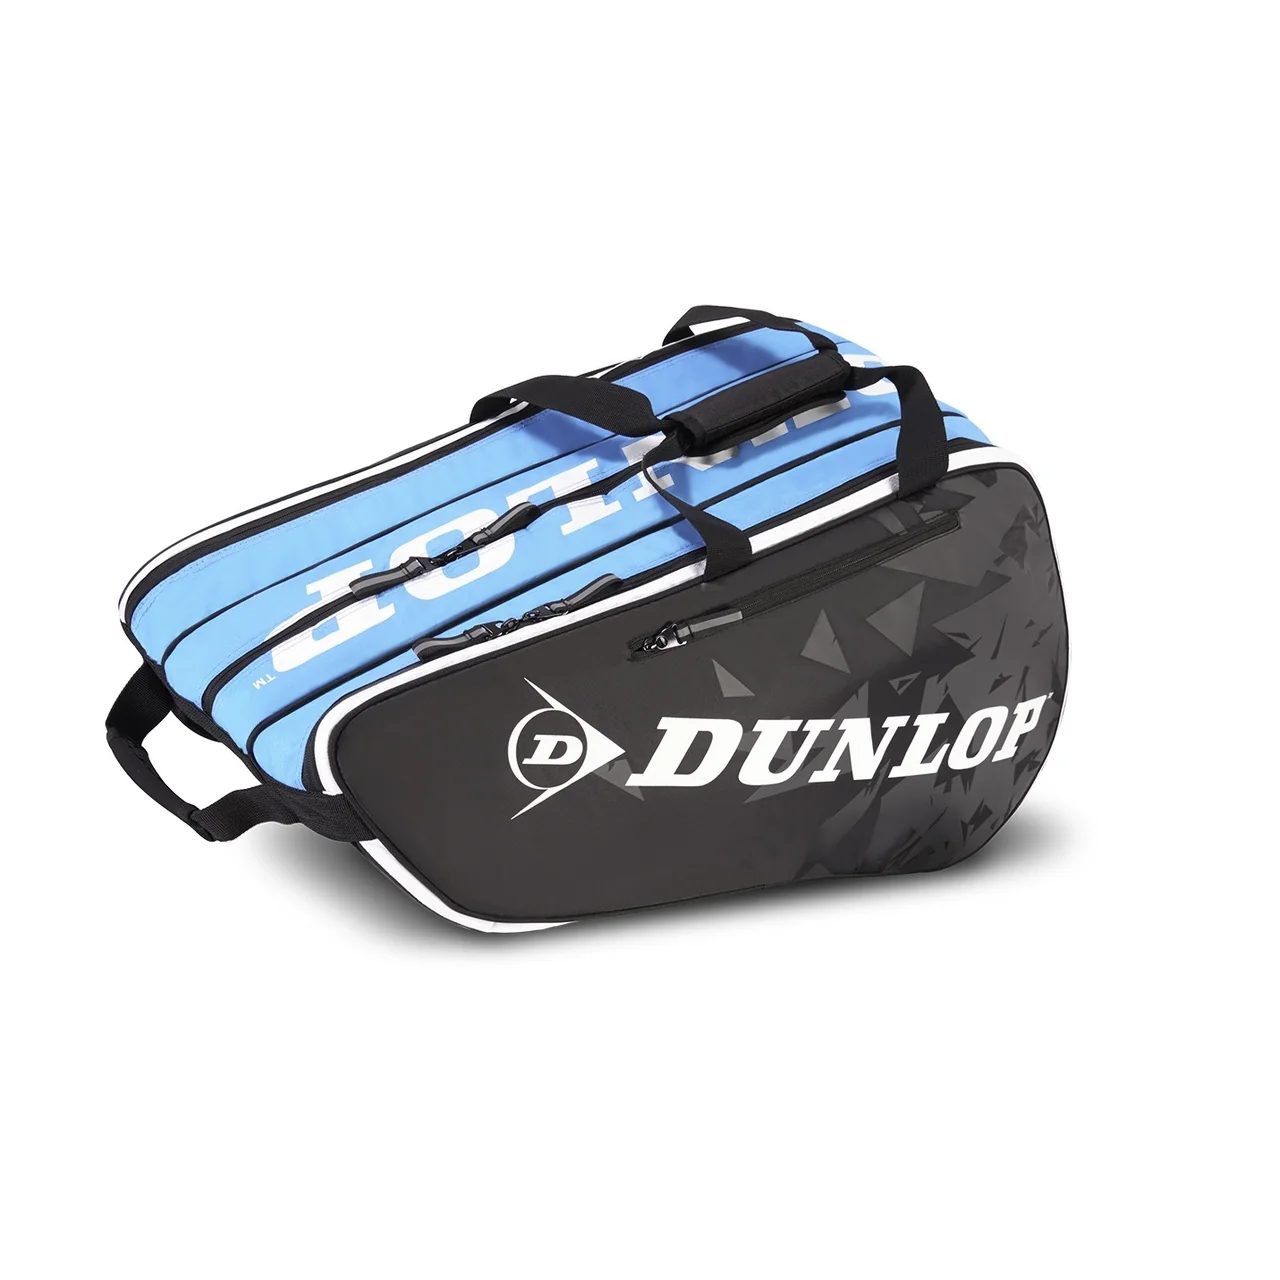 Dunlop Tour 10 Racket Bag 2.0 Black/Blue